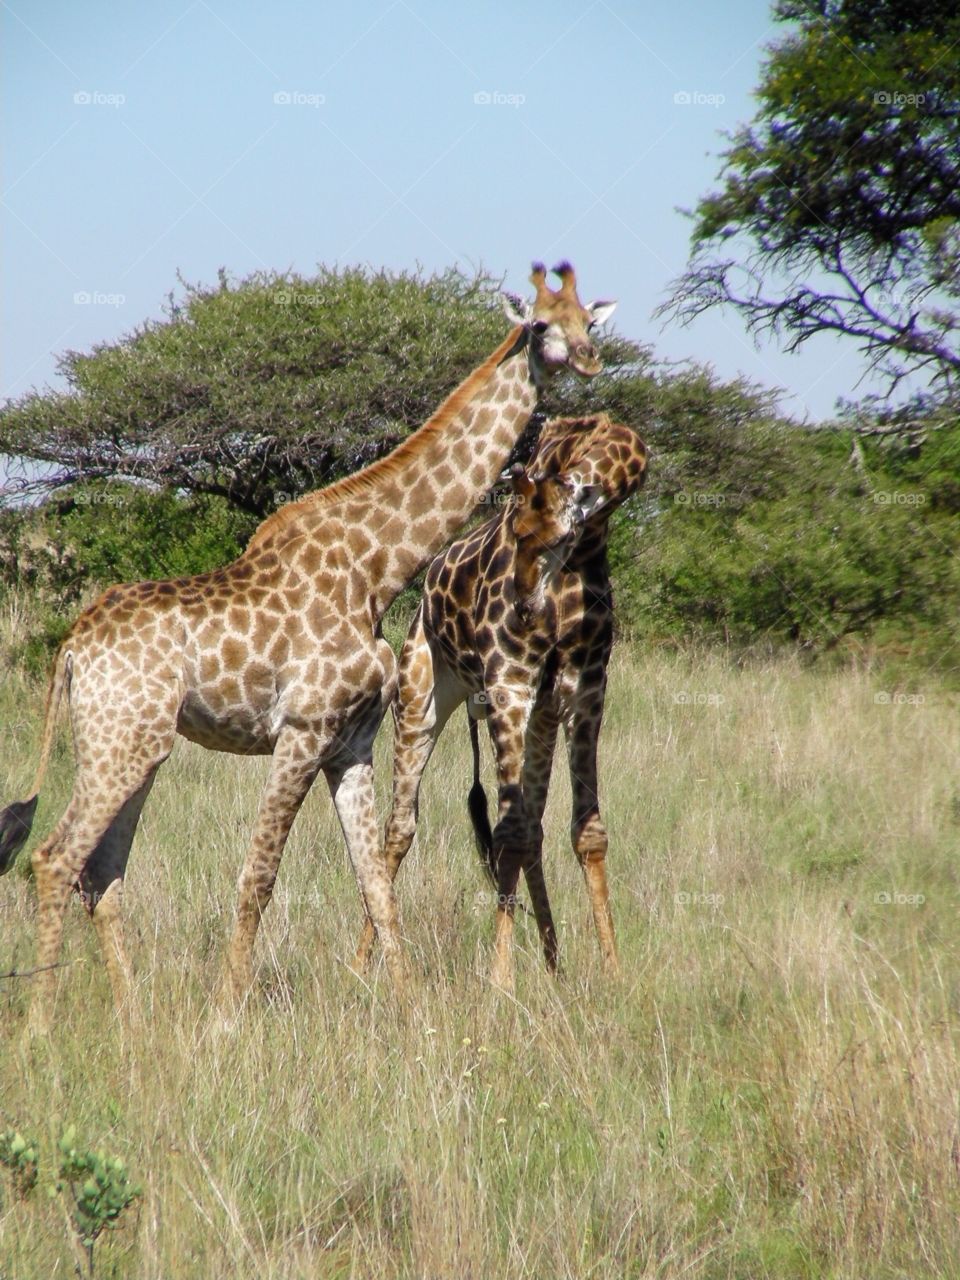 Giraffes rubbing necks